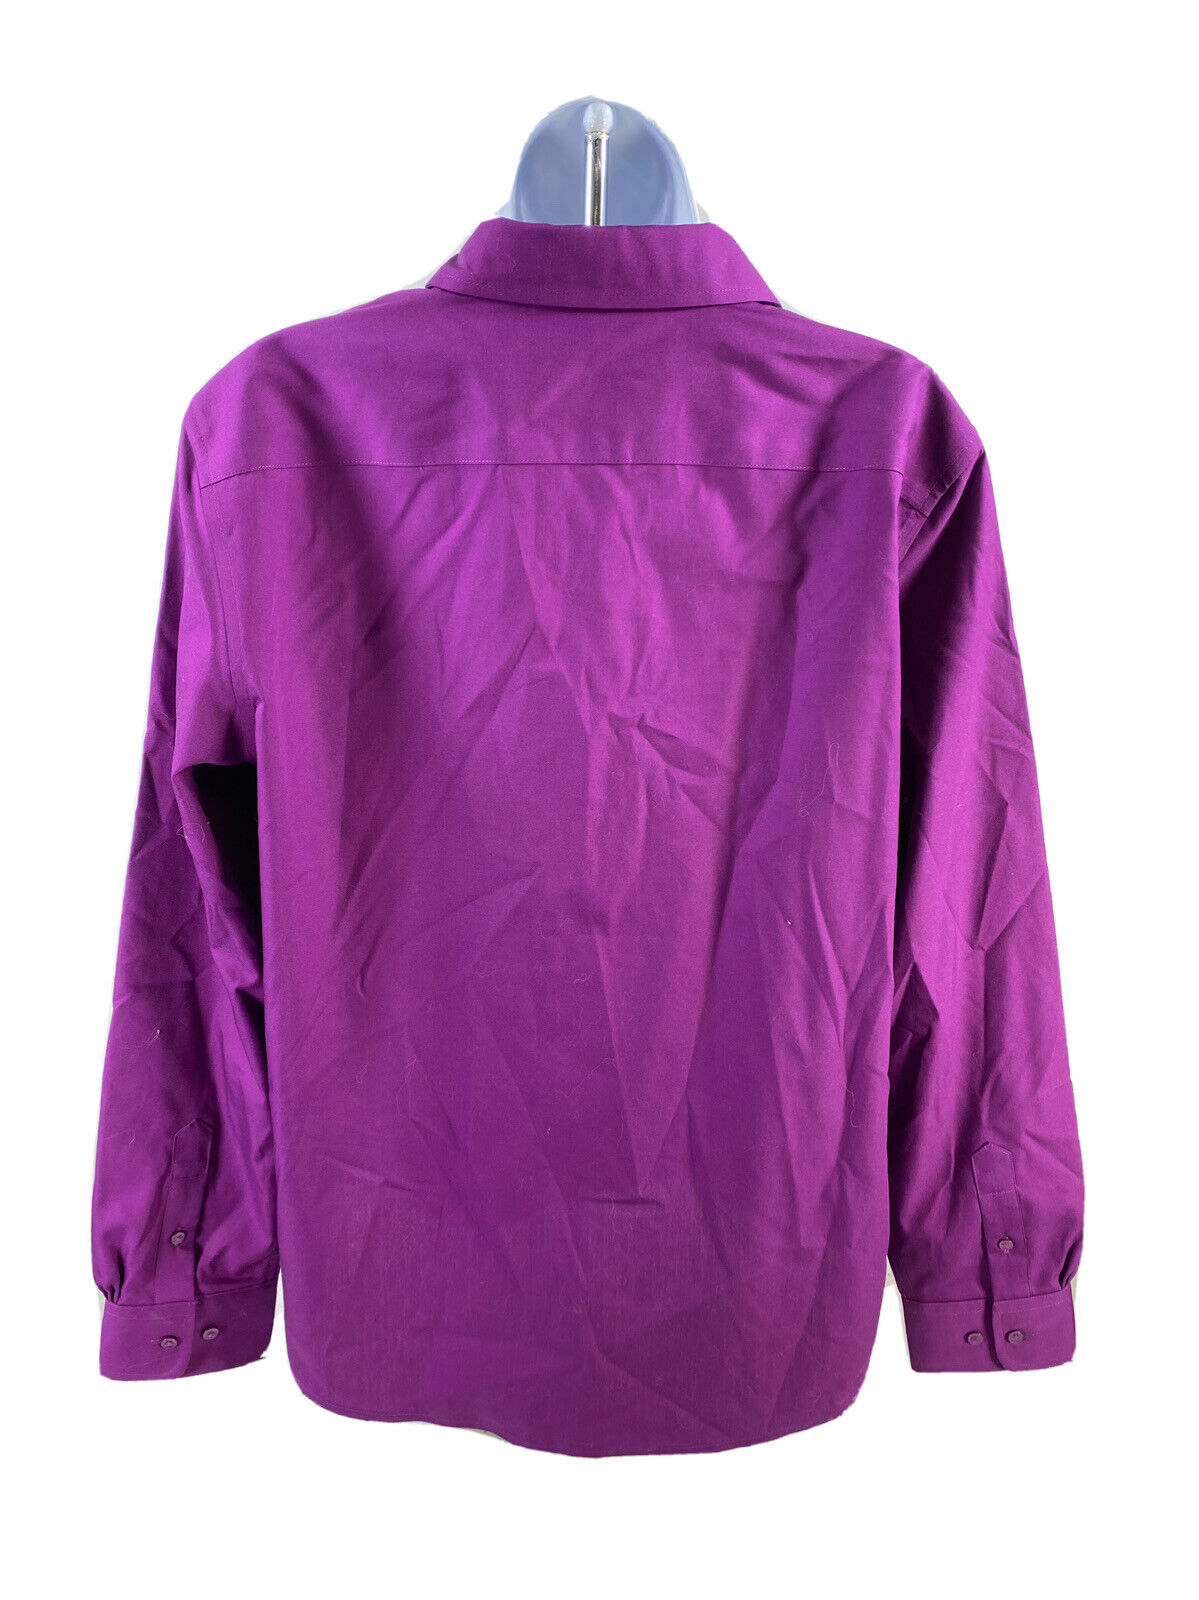 NEW Jones New York Women's Purple Easy Care Button Top Shirt - L